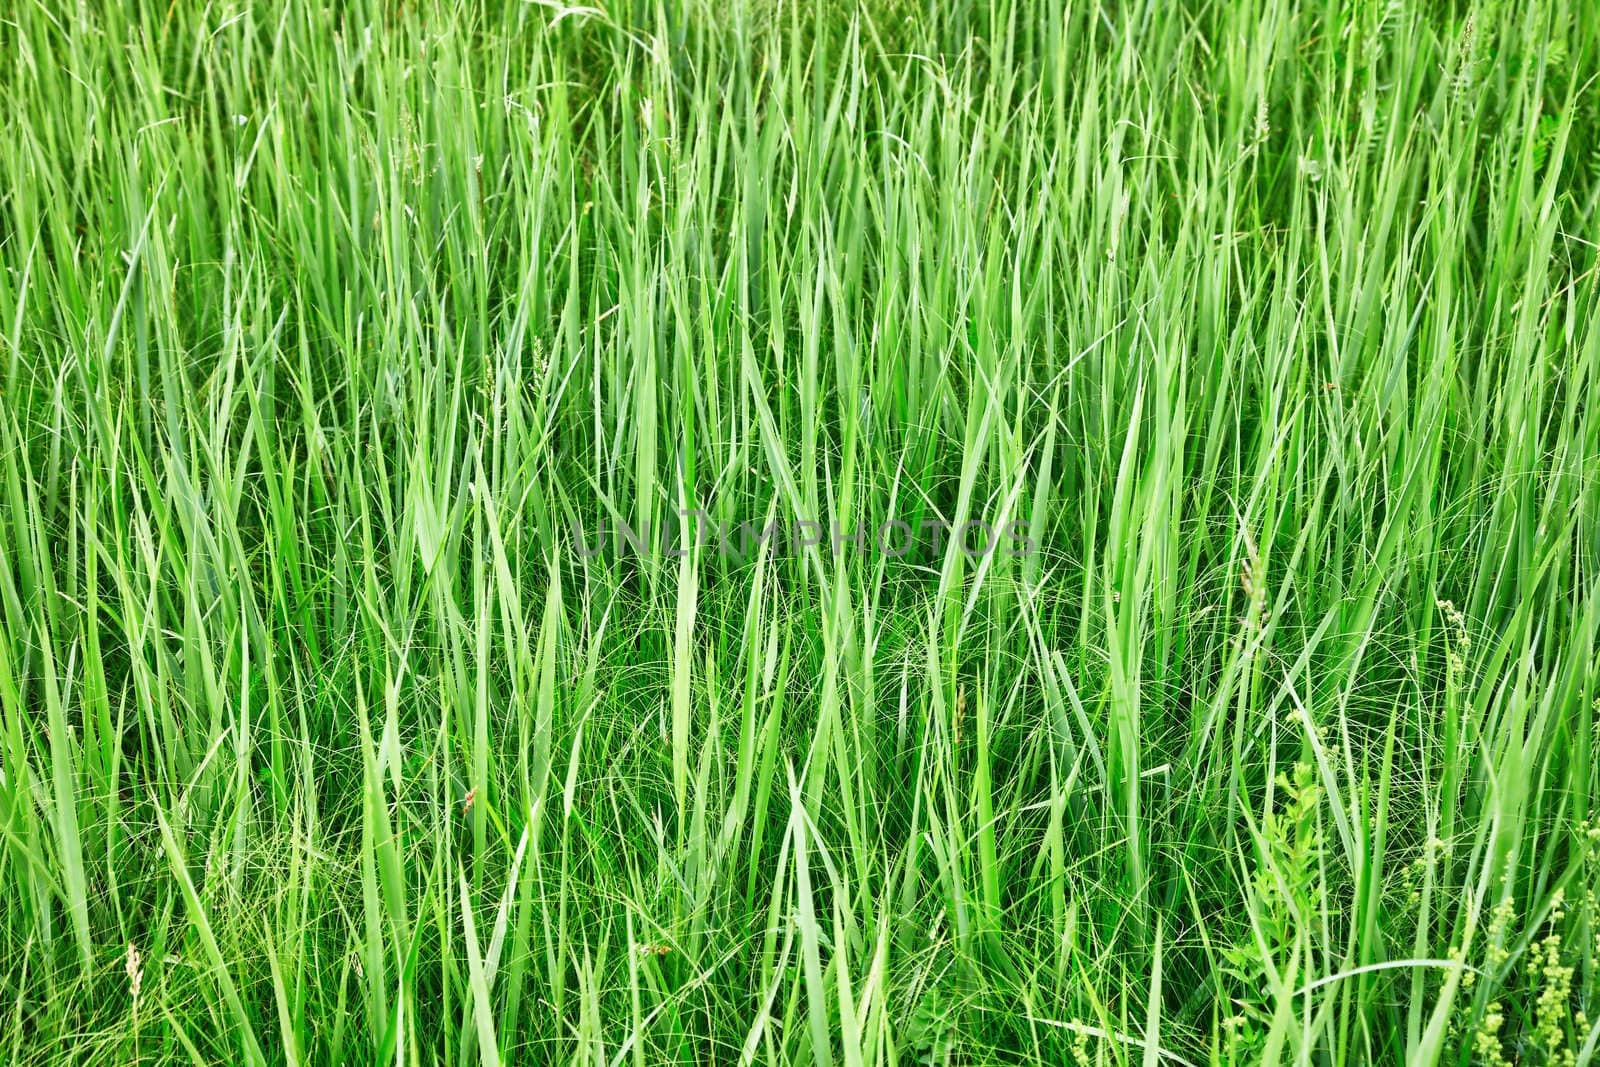 Green tall grass - natural background by pzaxe